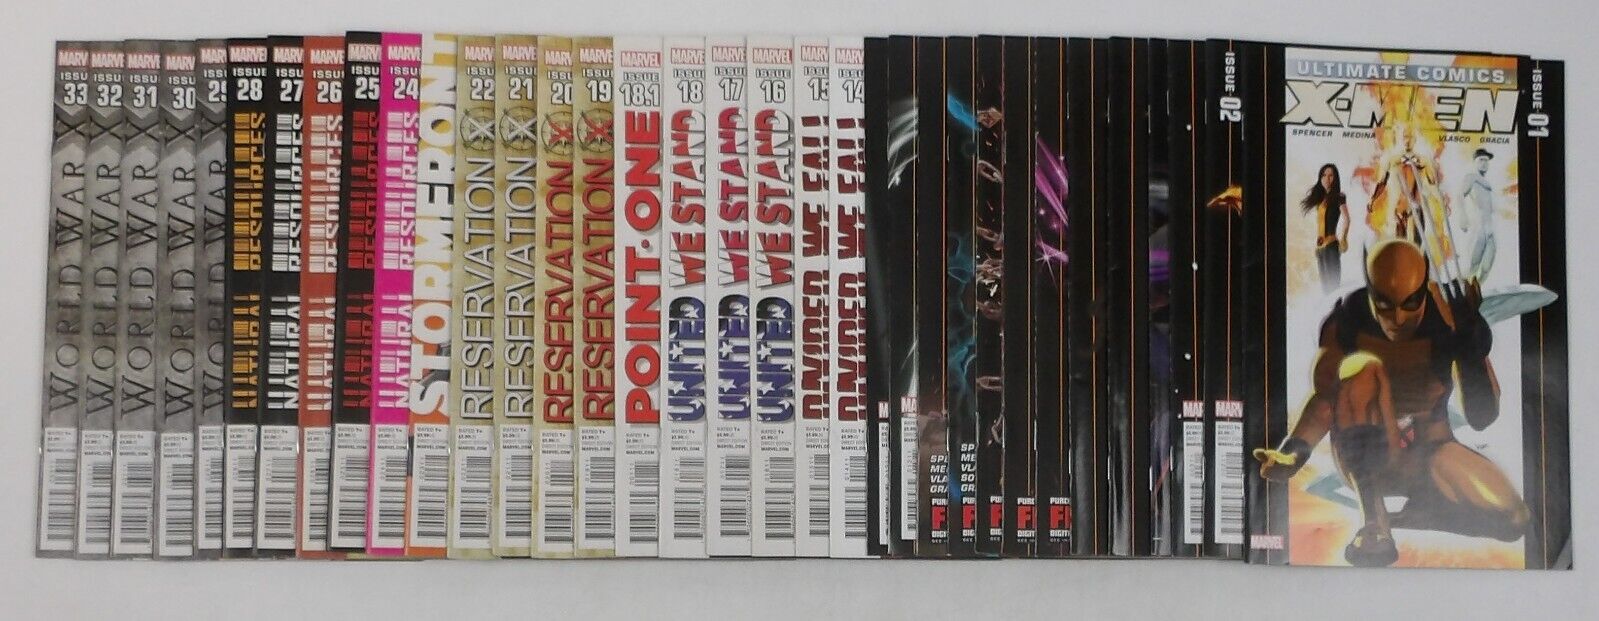 Ultimate X-Men Vol. 2 #1-33 VF/NM complete series + 18.1 Brian Wood set lot